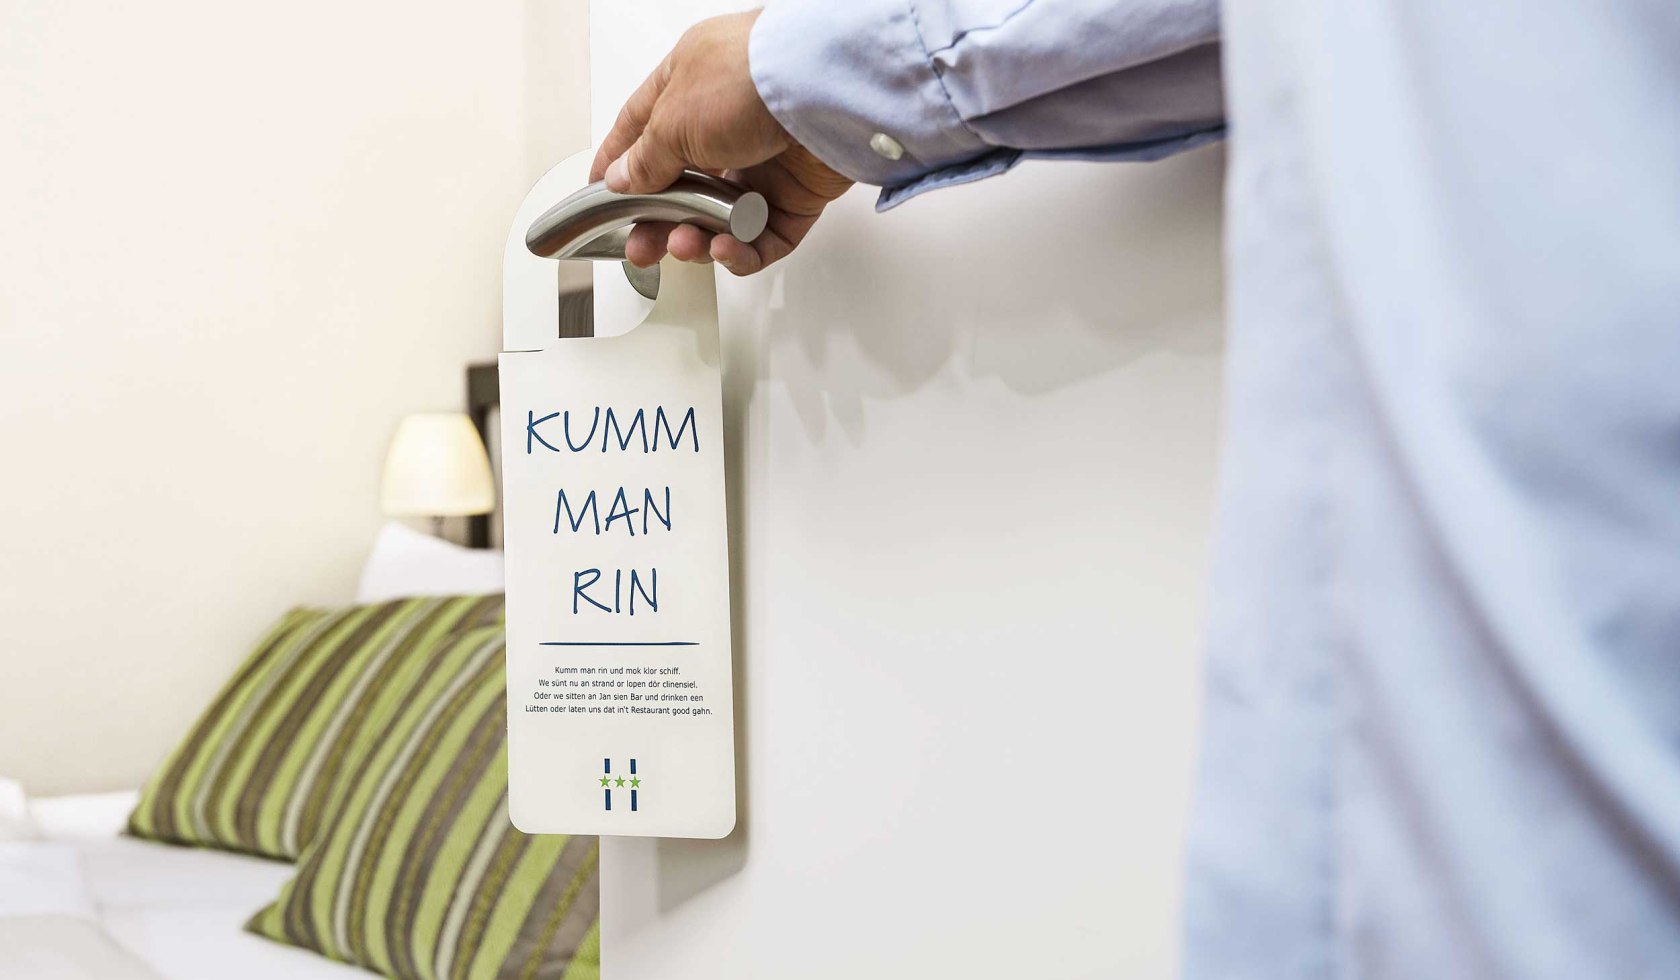 Kumm man rin, © Hotel Hinrichs, Jan Hinrichs / Thorsten Schmidtkord